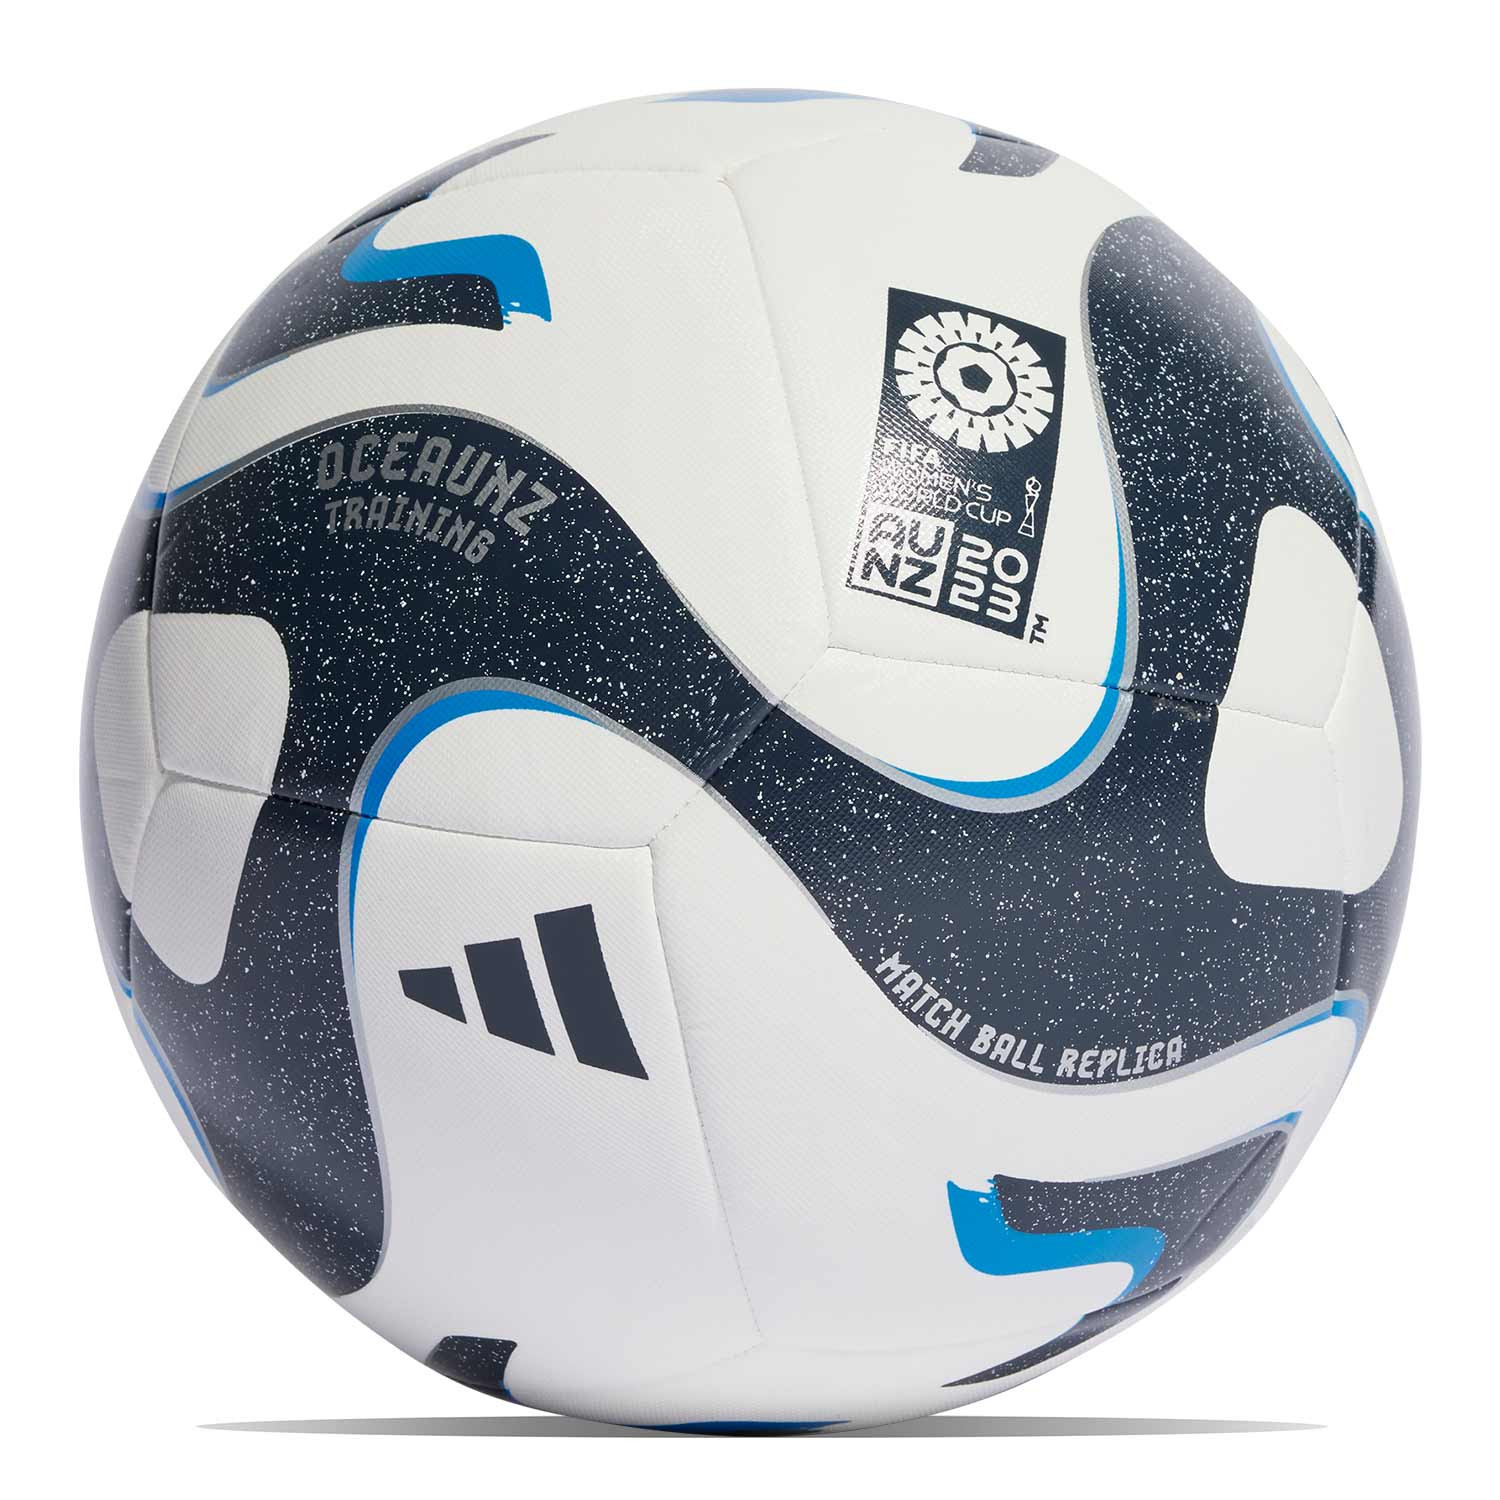 Balón adidas Oceaunz Training talla 5 blanco y marino |futbolmania